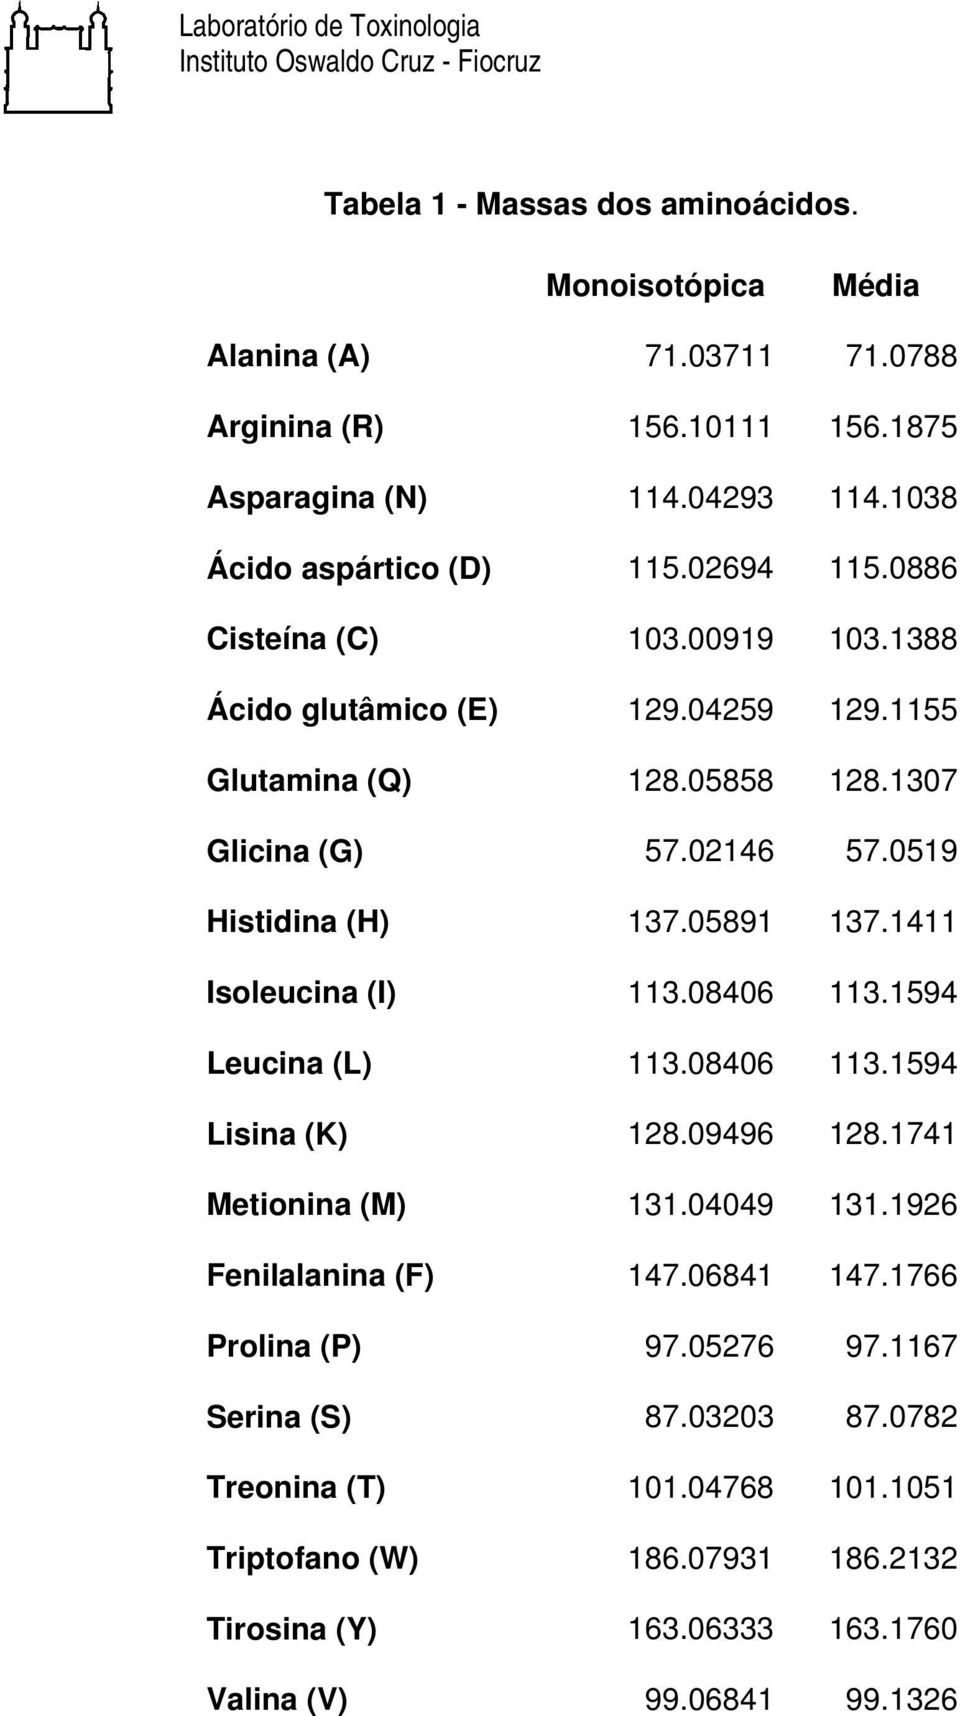 1411 Isoleucina (I) 113.08406 113.1594 Leucina (L) 113.08406 113.1594 Lisina (K) 128.09496 128.1741 Metionina (M) 131.04049 131.1926 Fenilalanina (F) 147.06841 147.